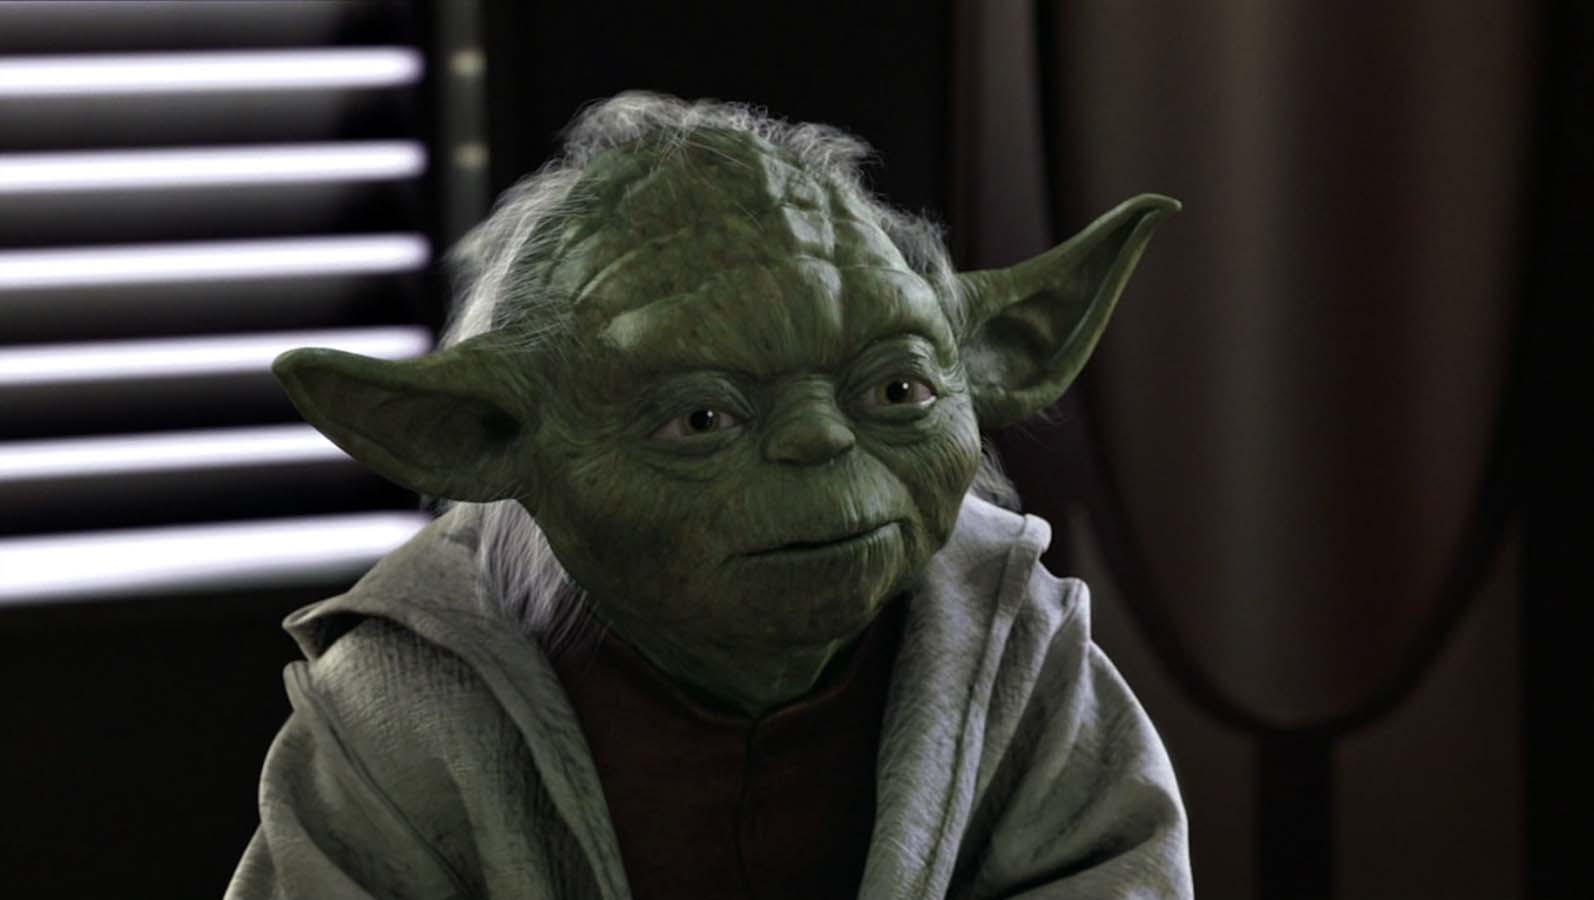 General 1594x900 Star Wars Yoda Star Wars: Episode III - The Revenge of the Sith Jedi movies science fiction film stills green skin